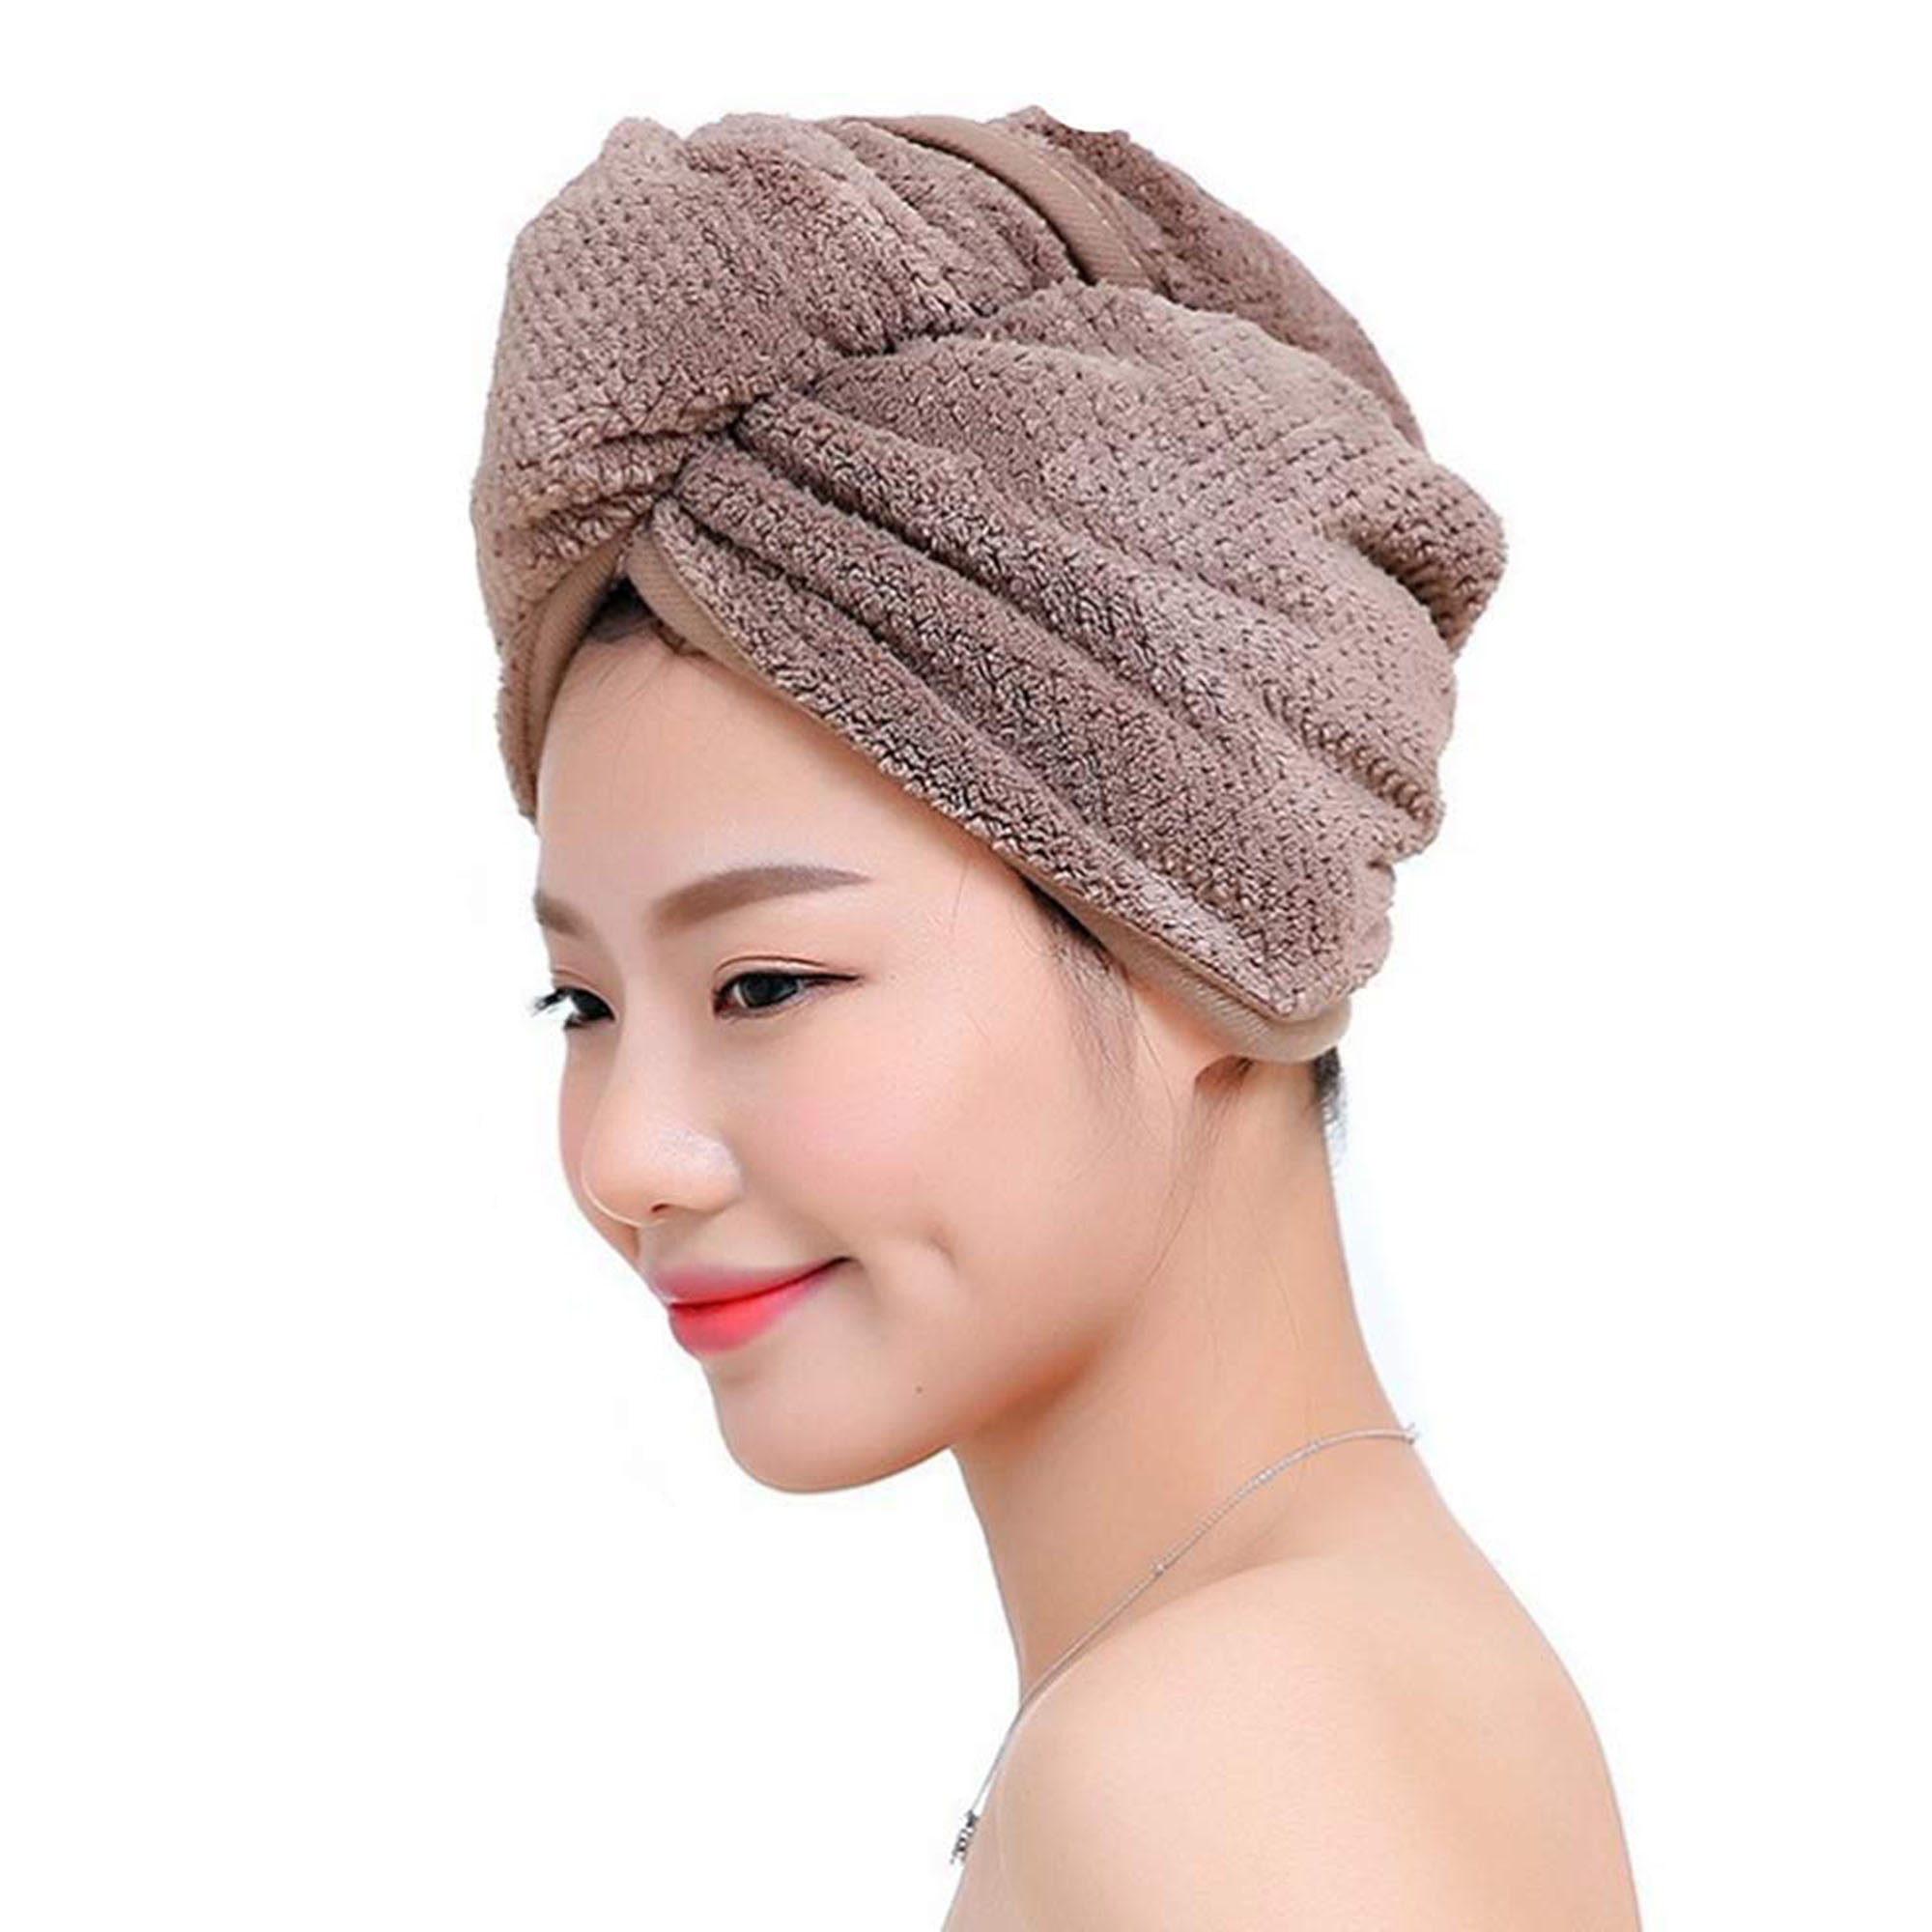 Turban Twist Dry Shower Cotton Hair Wrap Towel Drying Bath Spa Head Cap Hat New 